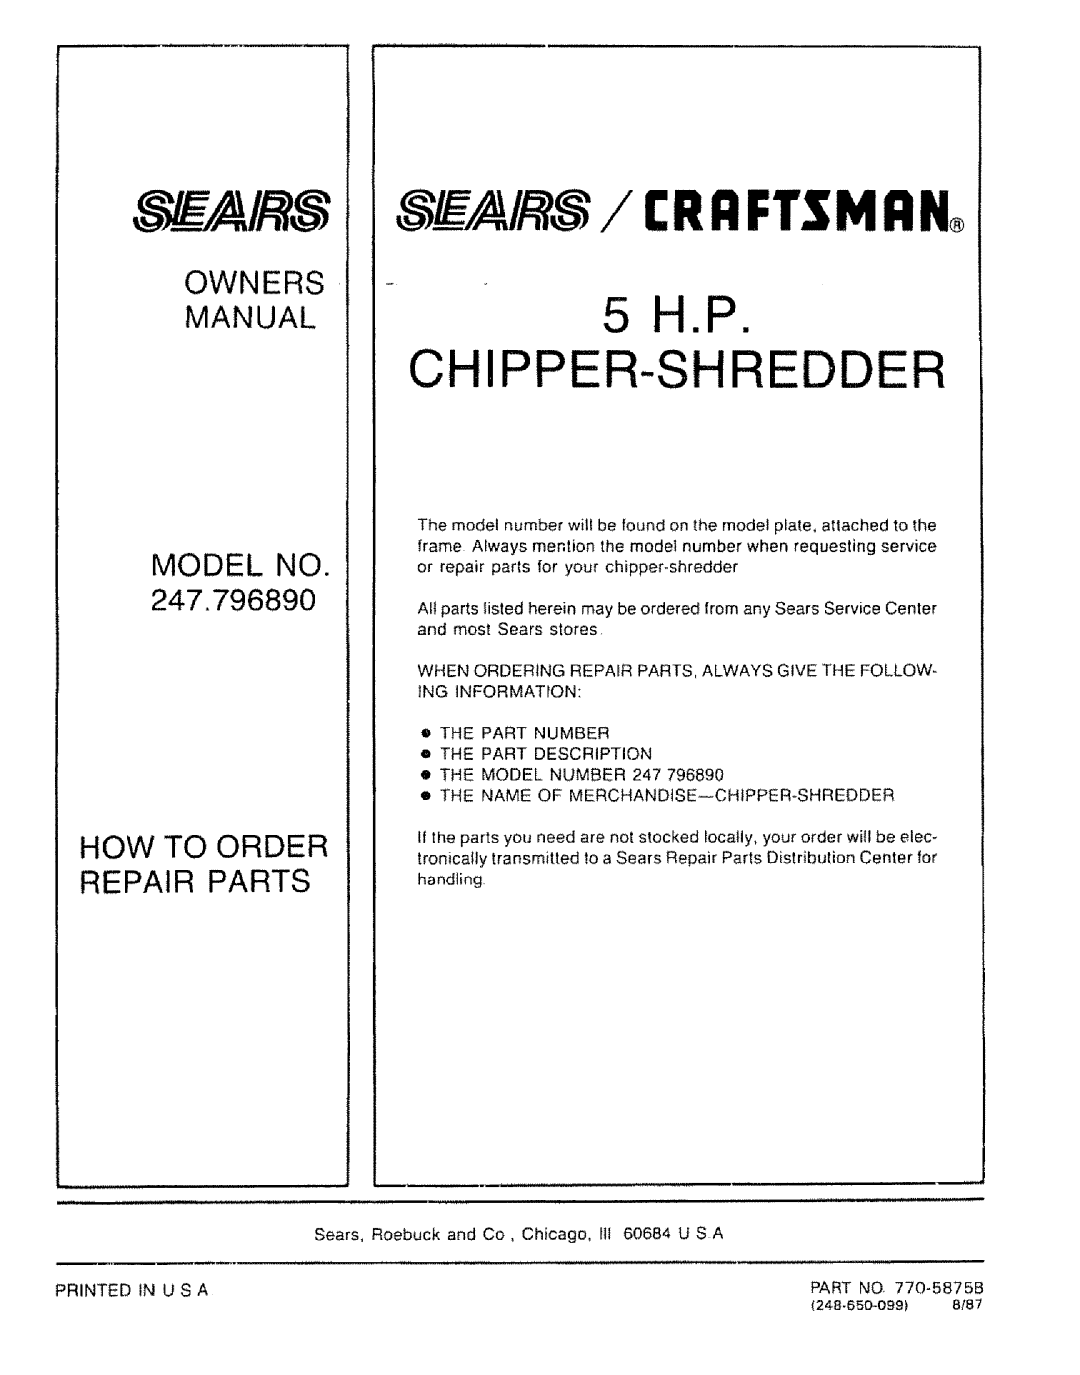 Craftsman 247.796890 manual How To Order Repair Parts, Model No, £ . / /,e,@@ / /, ,@/ CRRFT.SM AN, 5H.P CHIPPER-SHREDDER 